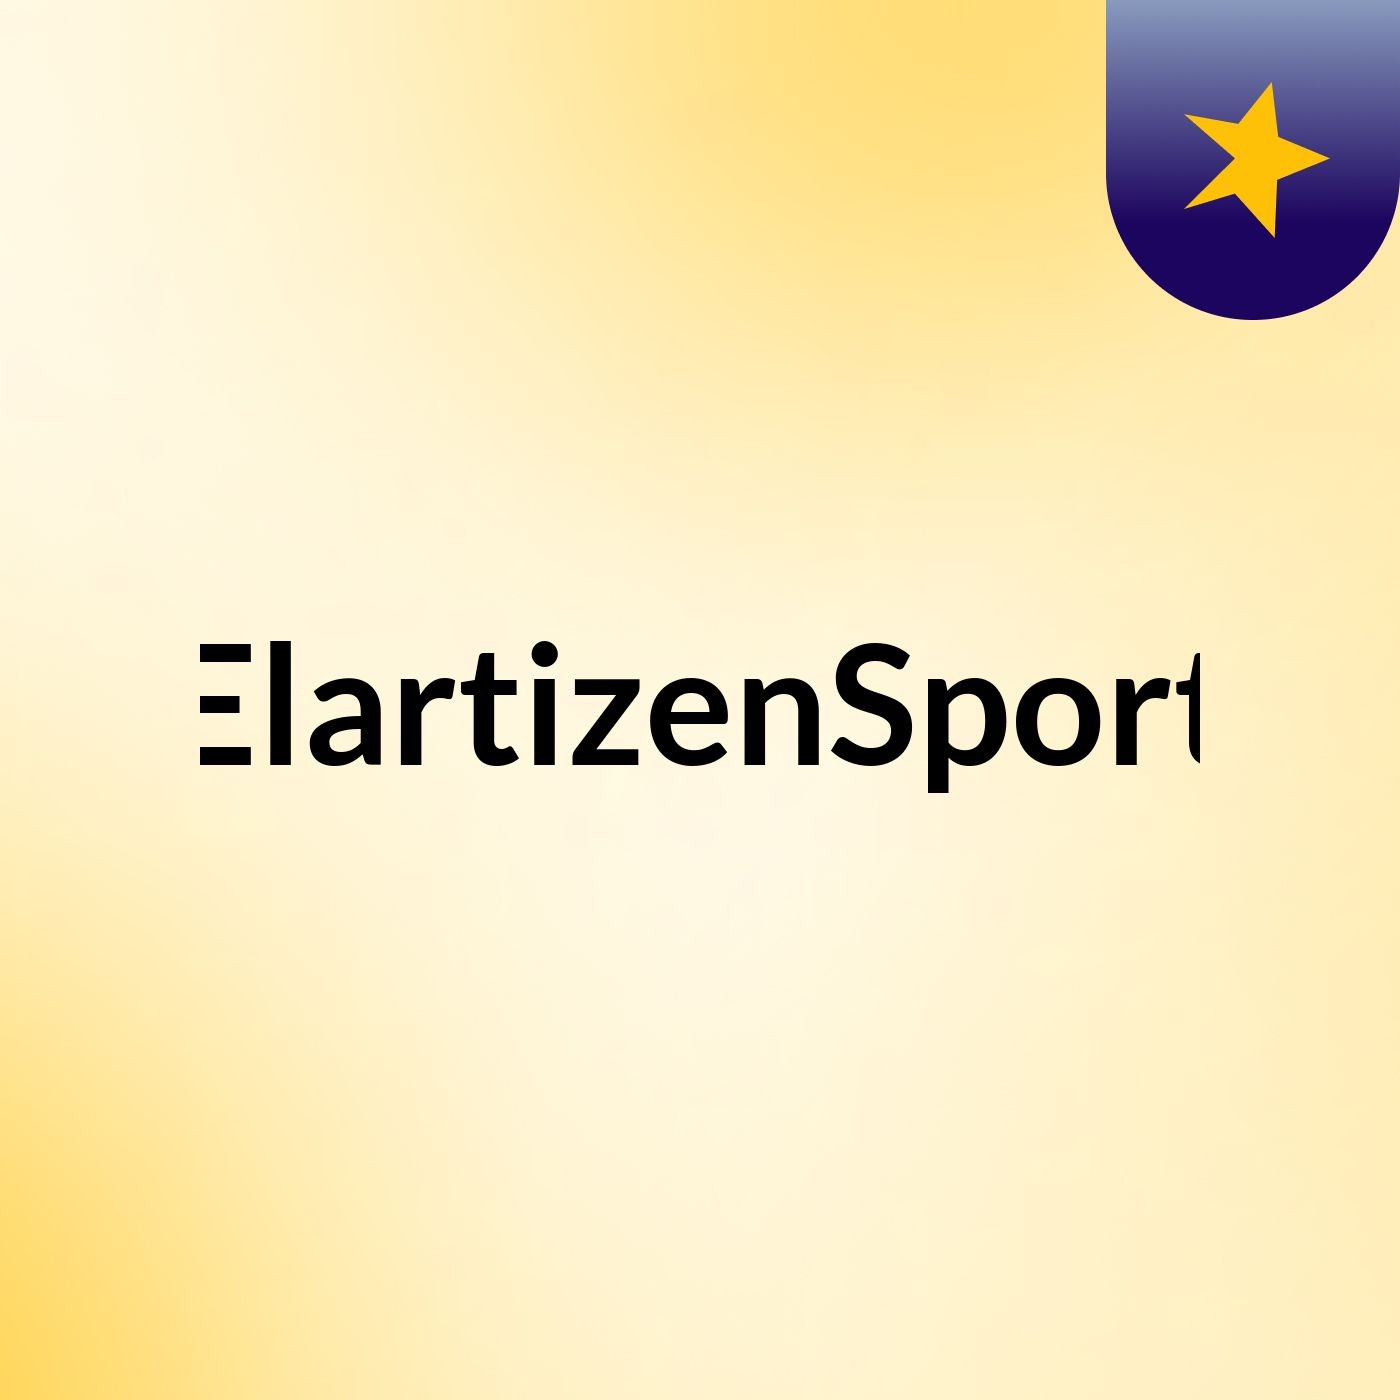 ElartizenSport